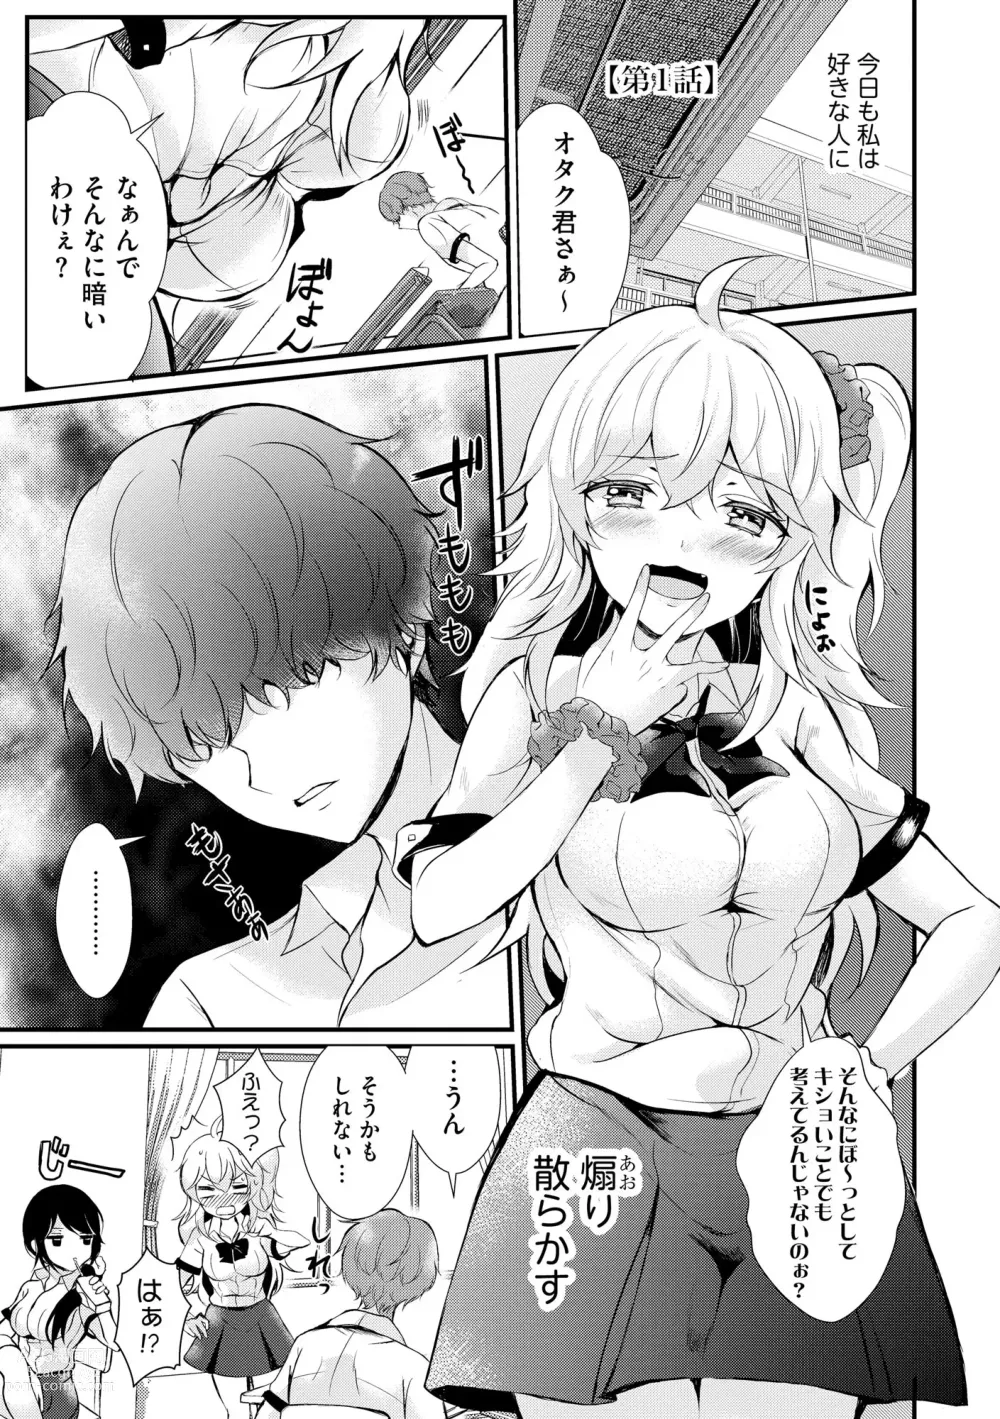 Page 5 of manga Choro Cos!